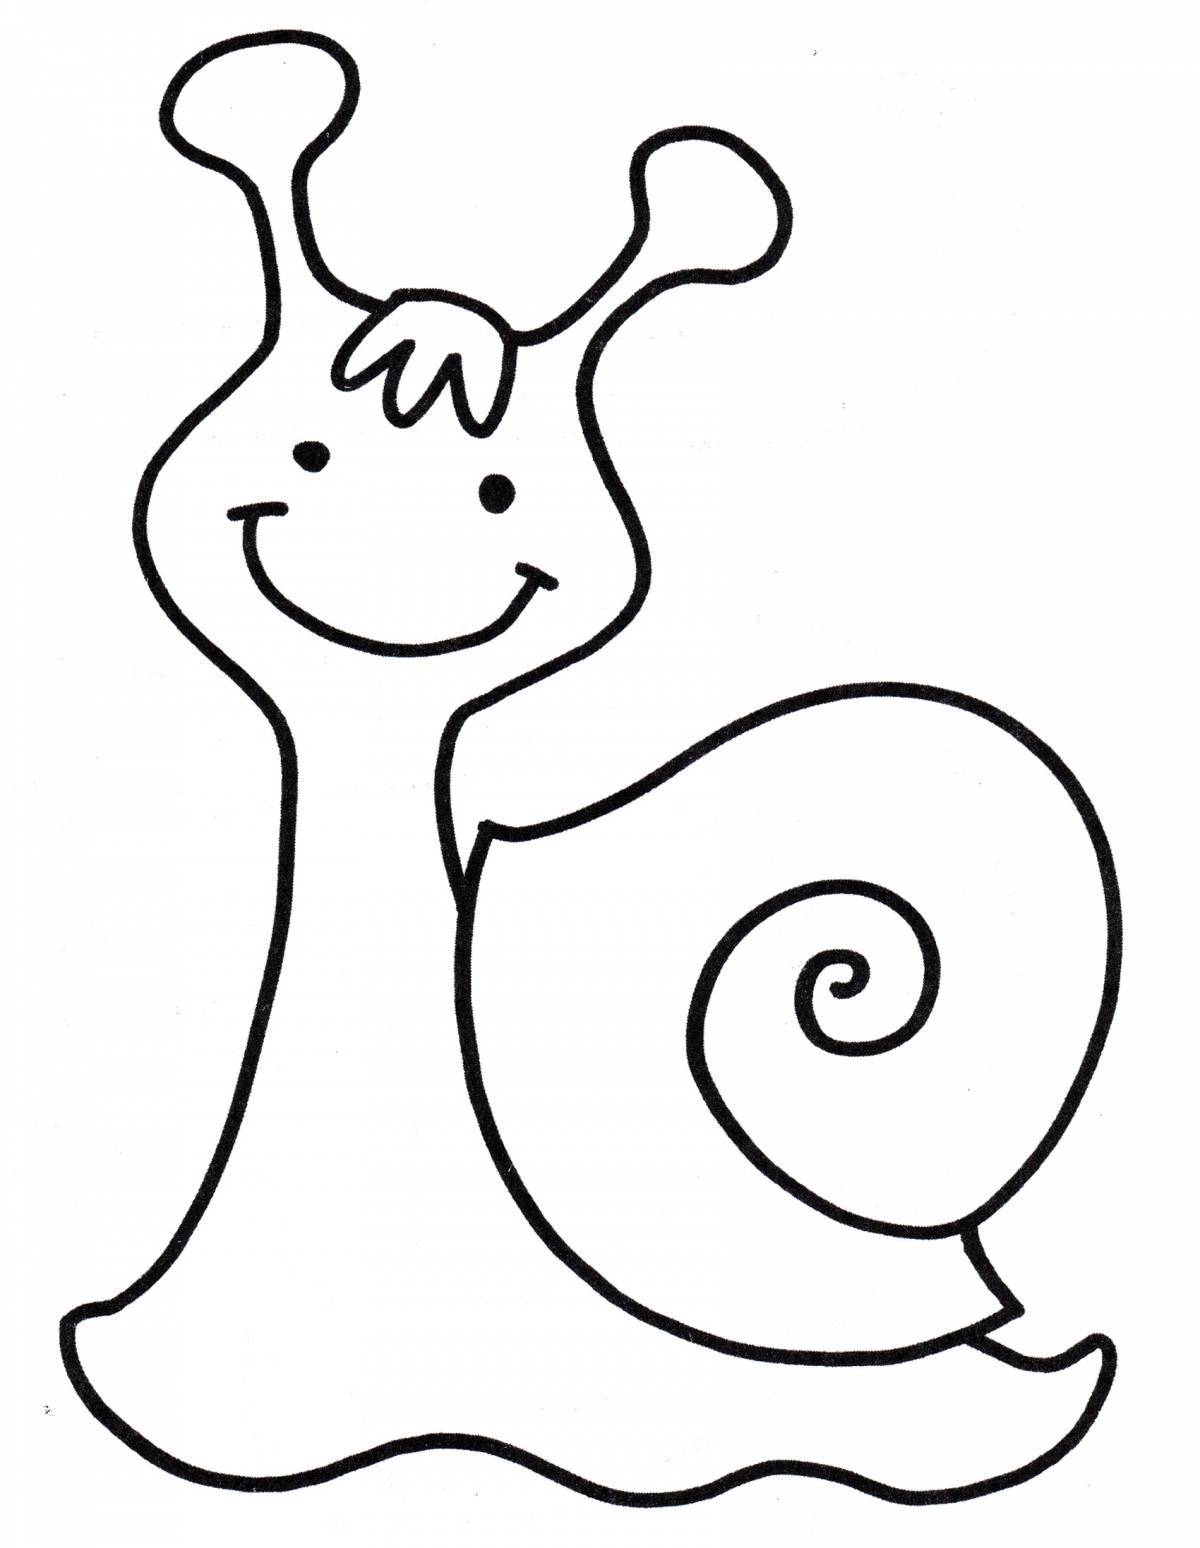 Zani snail coloring book for kids